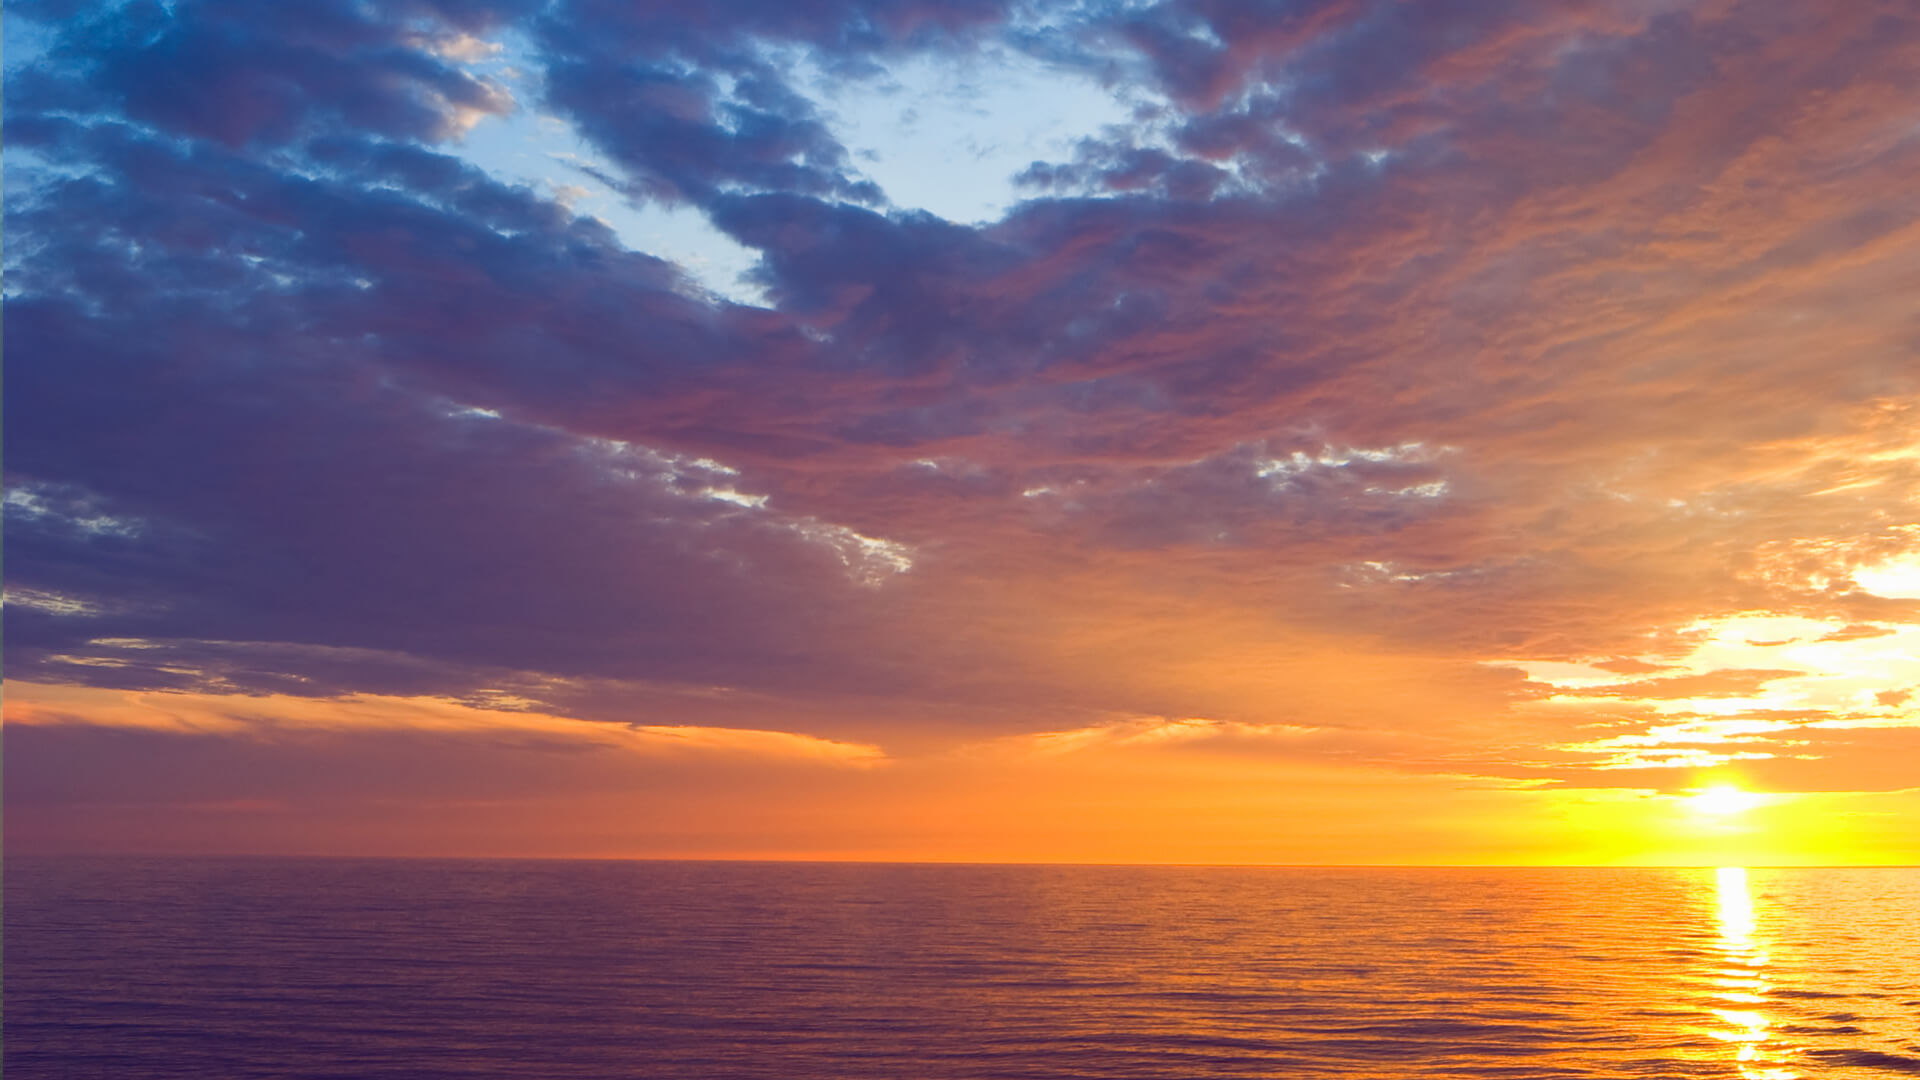 Open seas with beautiful sunset